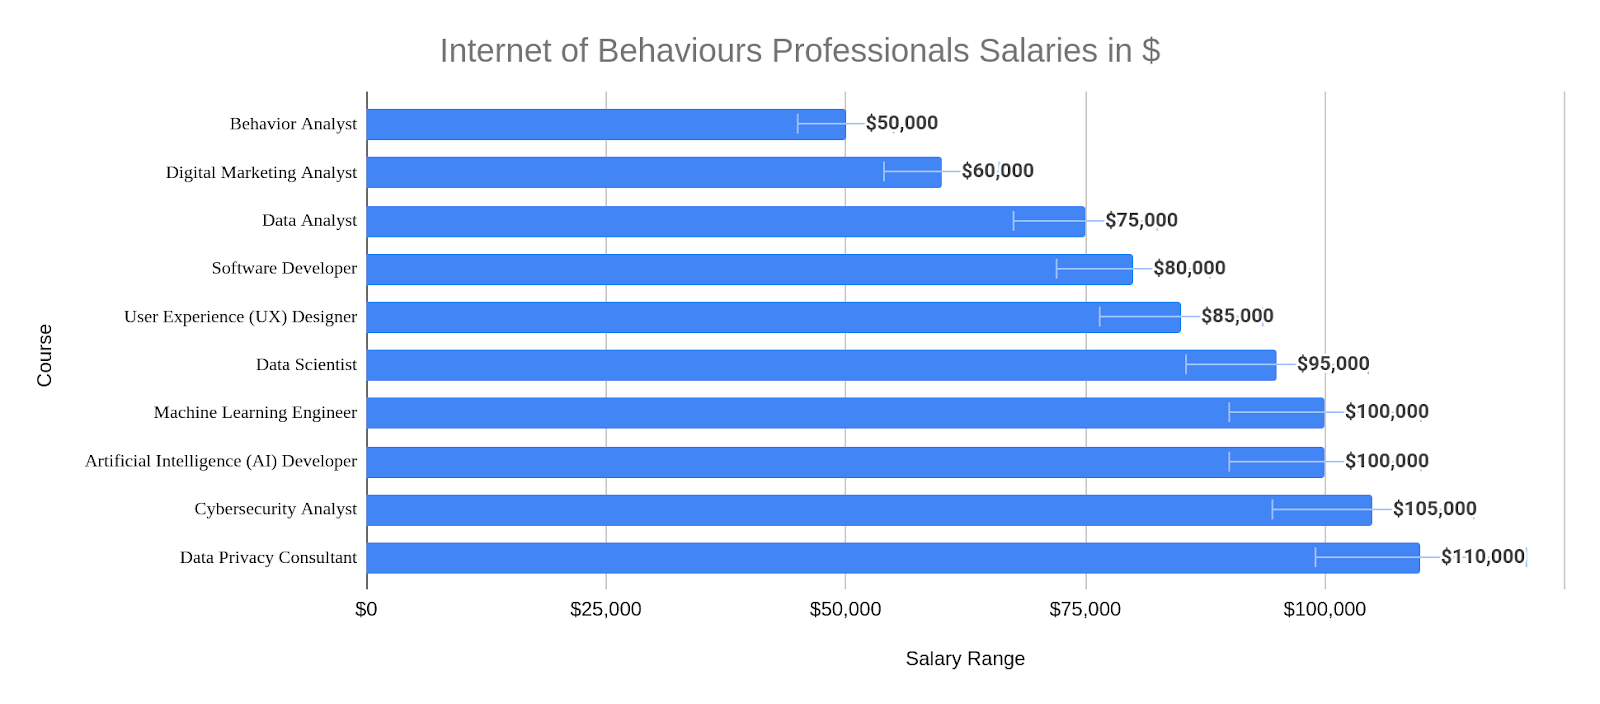 Internet of Behaviours Professionals Salaries in $